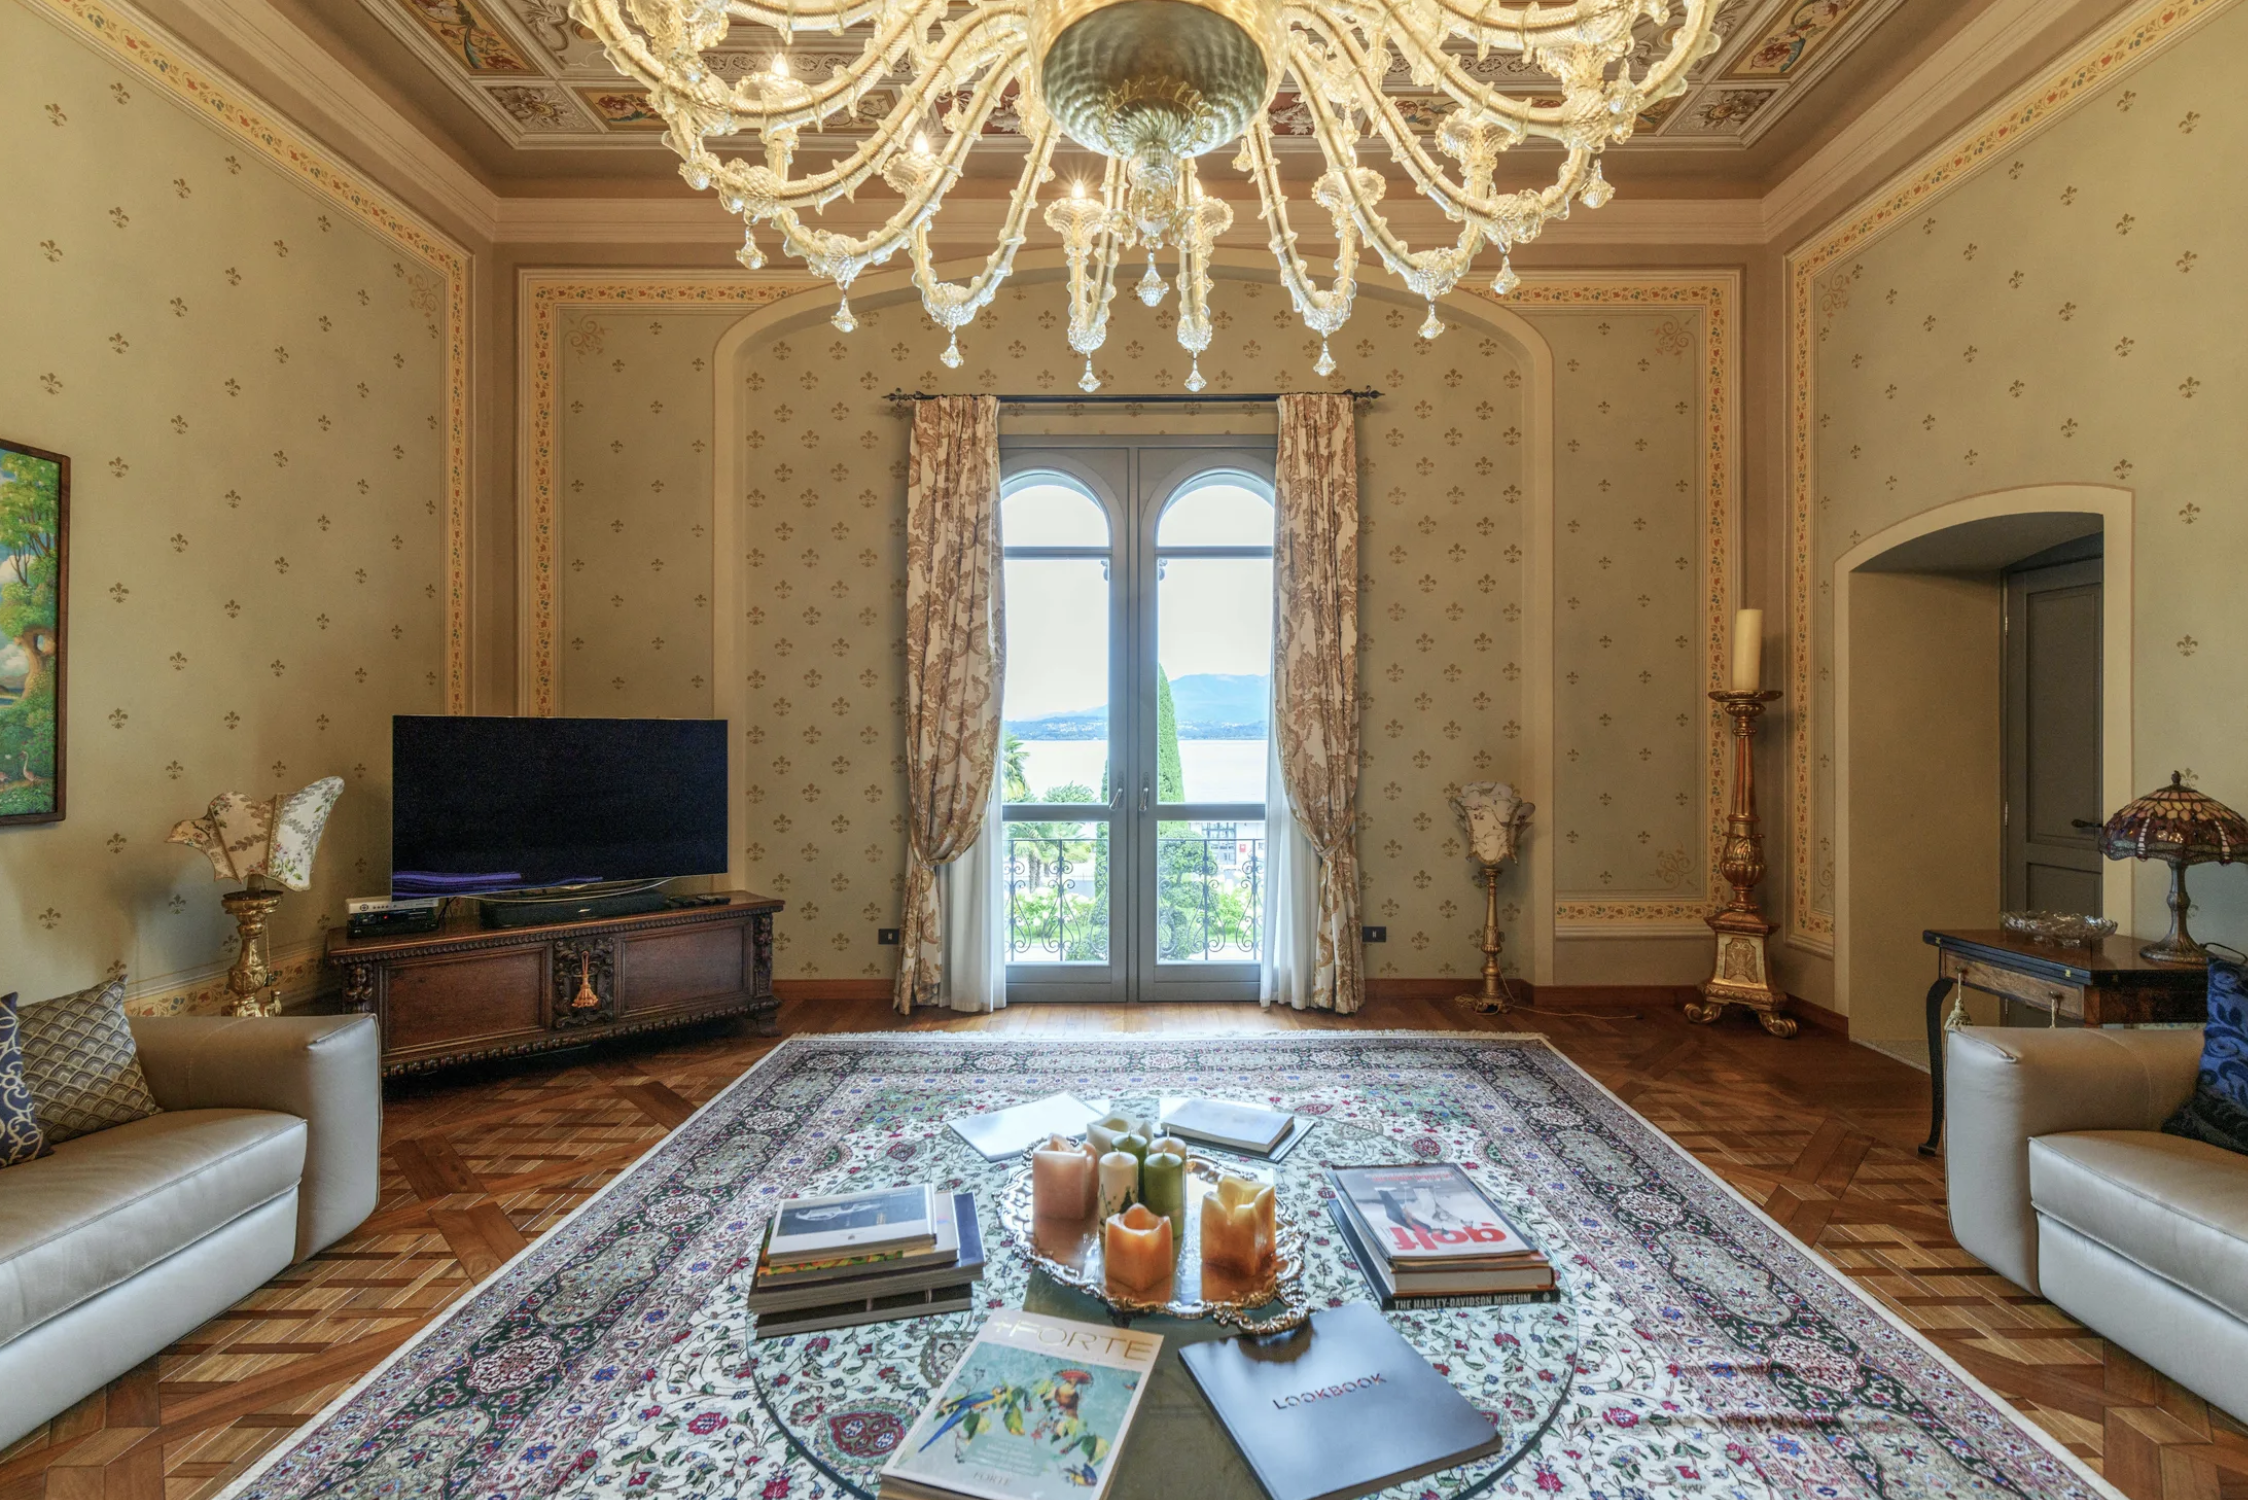 Francis York Art Nouveau Villa on Lake Maggiore, Italy 00007.png